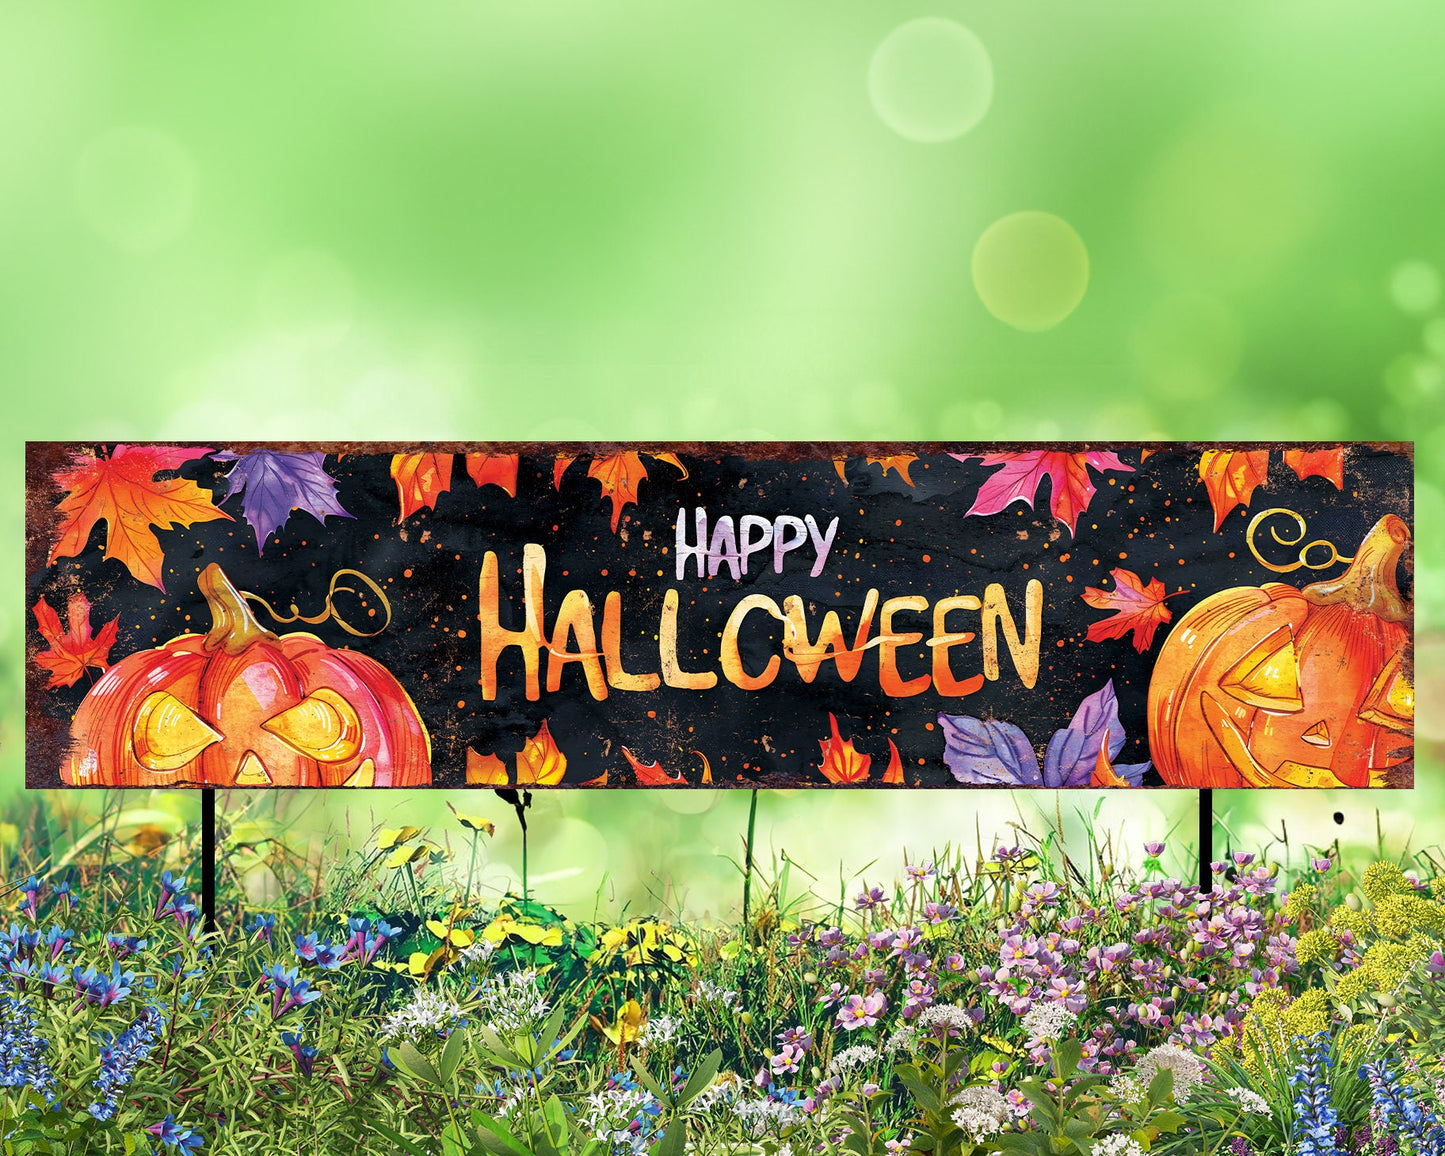 36in Happy Halloween Garden Stake - Watercolor Style Pumpkin - Perfect for Outdoor Decor, Yard Art, Halloween Garden Decorations